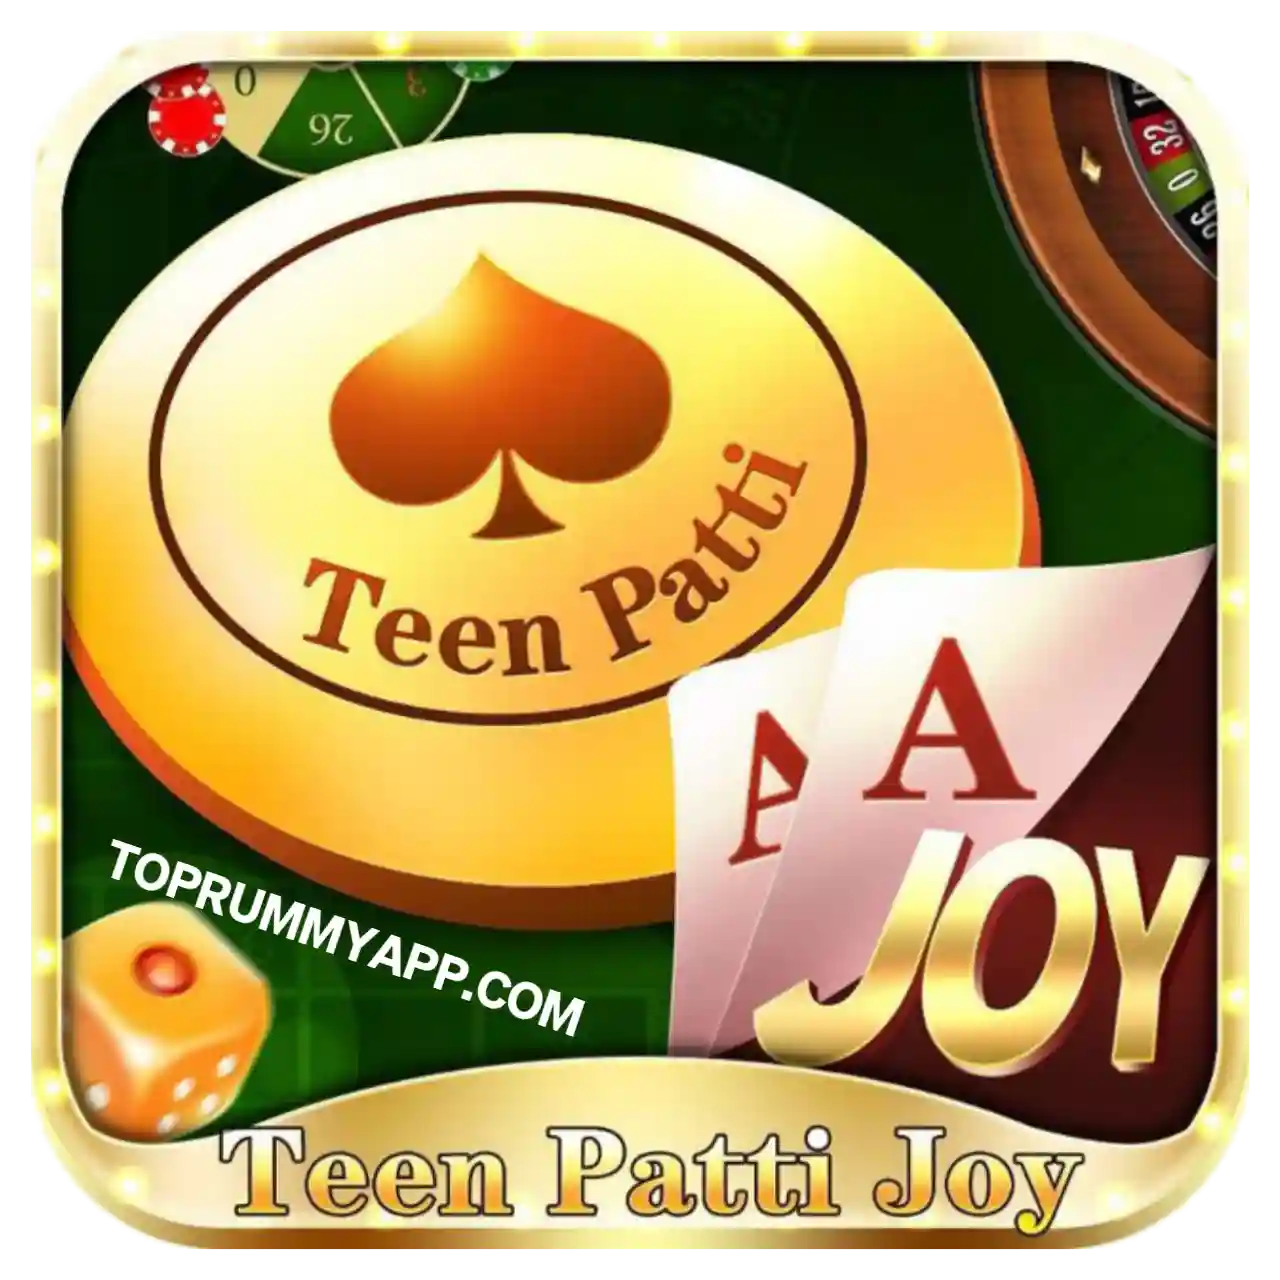 Teen Patti Joy App Top 7 Up Down App